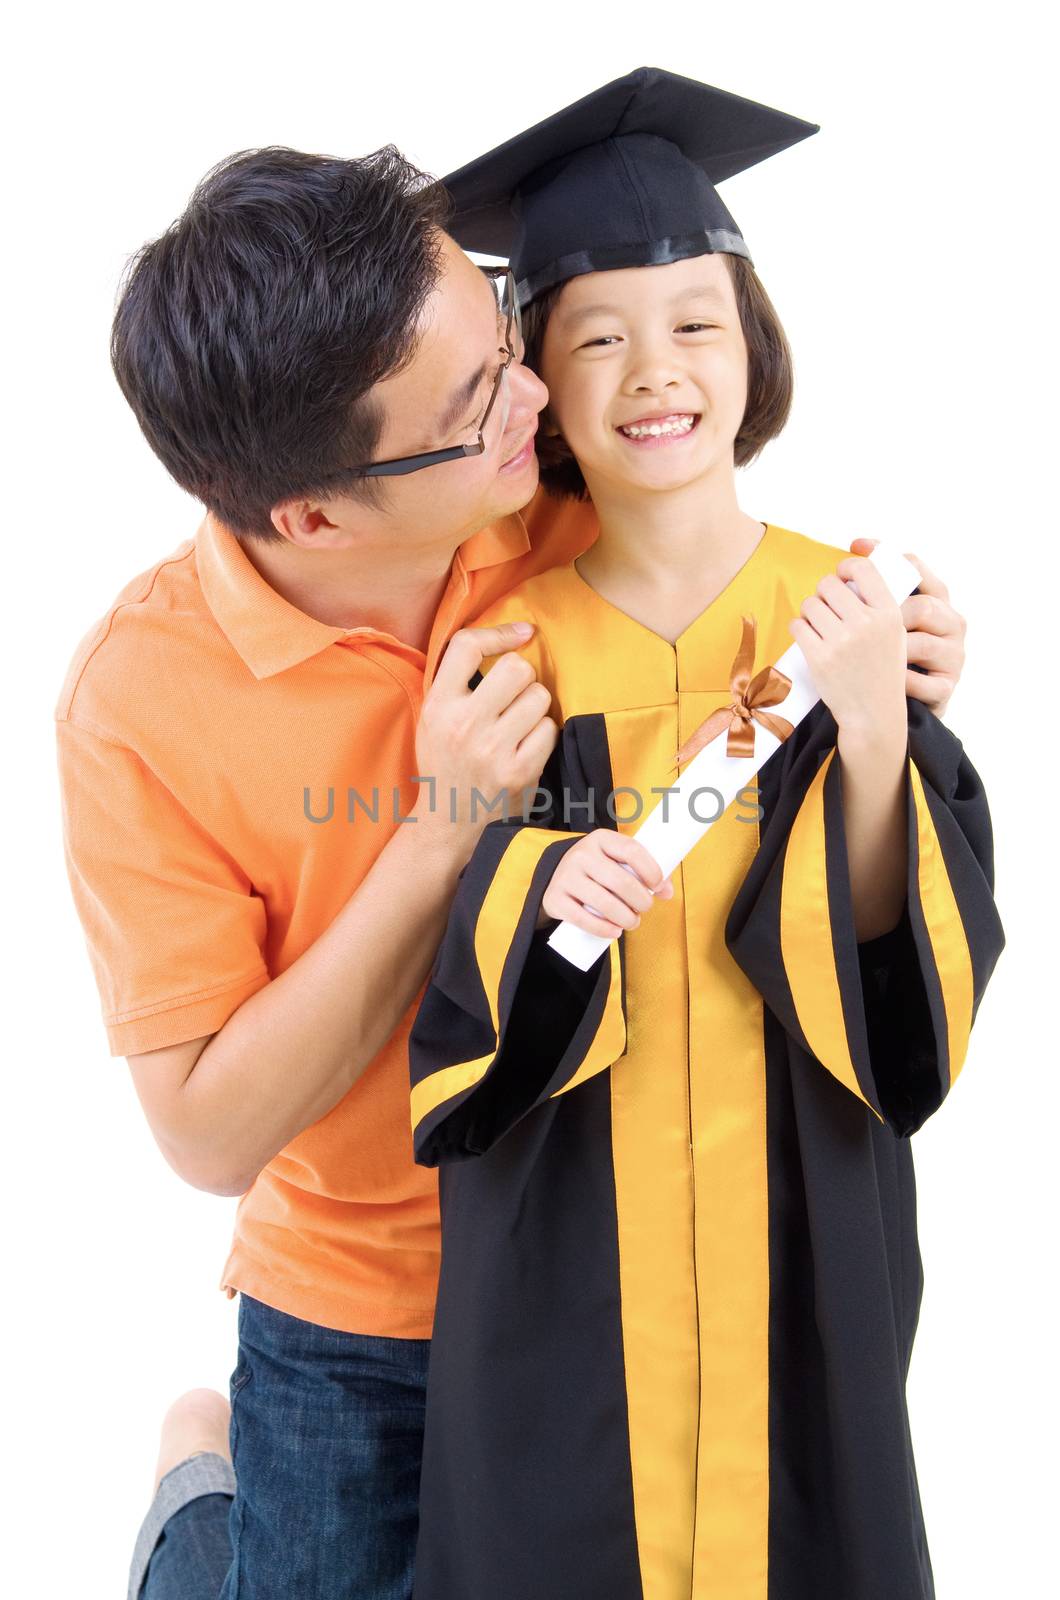 Graduation kid by yongtick